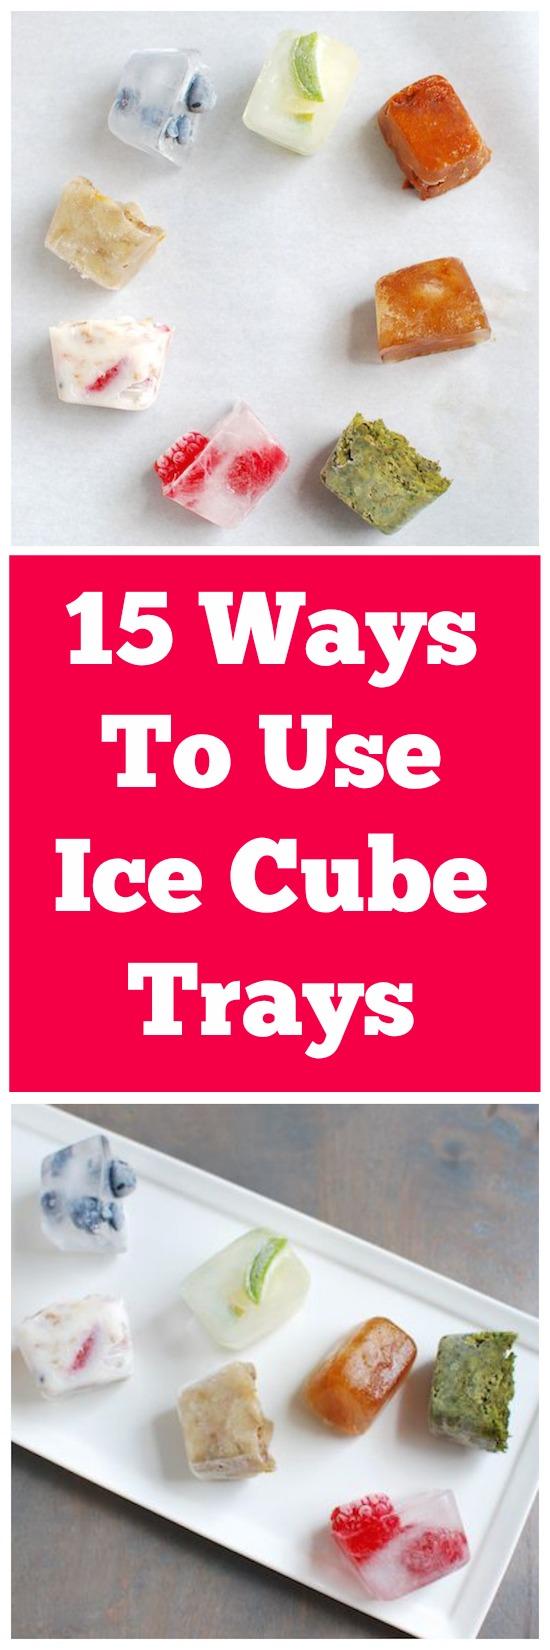 https://www.theleangreenbean.com/wp-content/uploads/2014/07/ice-cube-trays.jpg.jpg